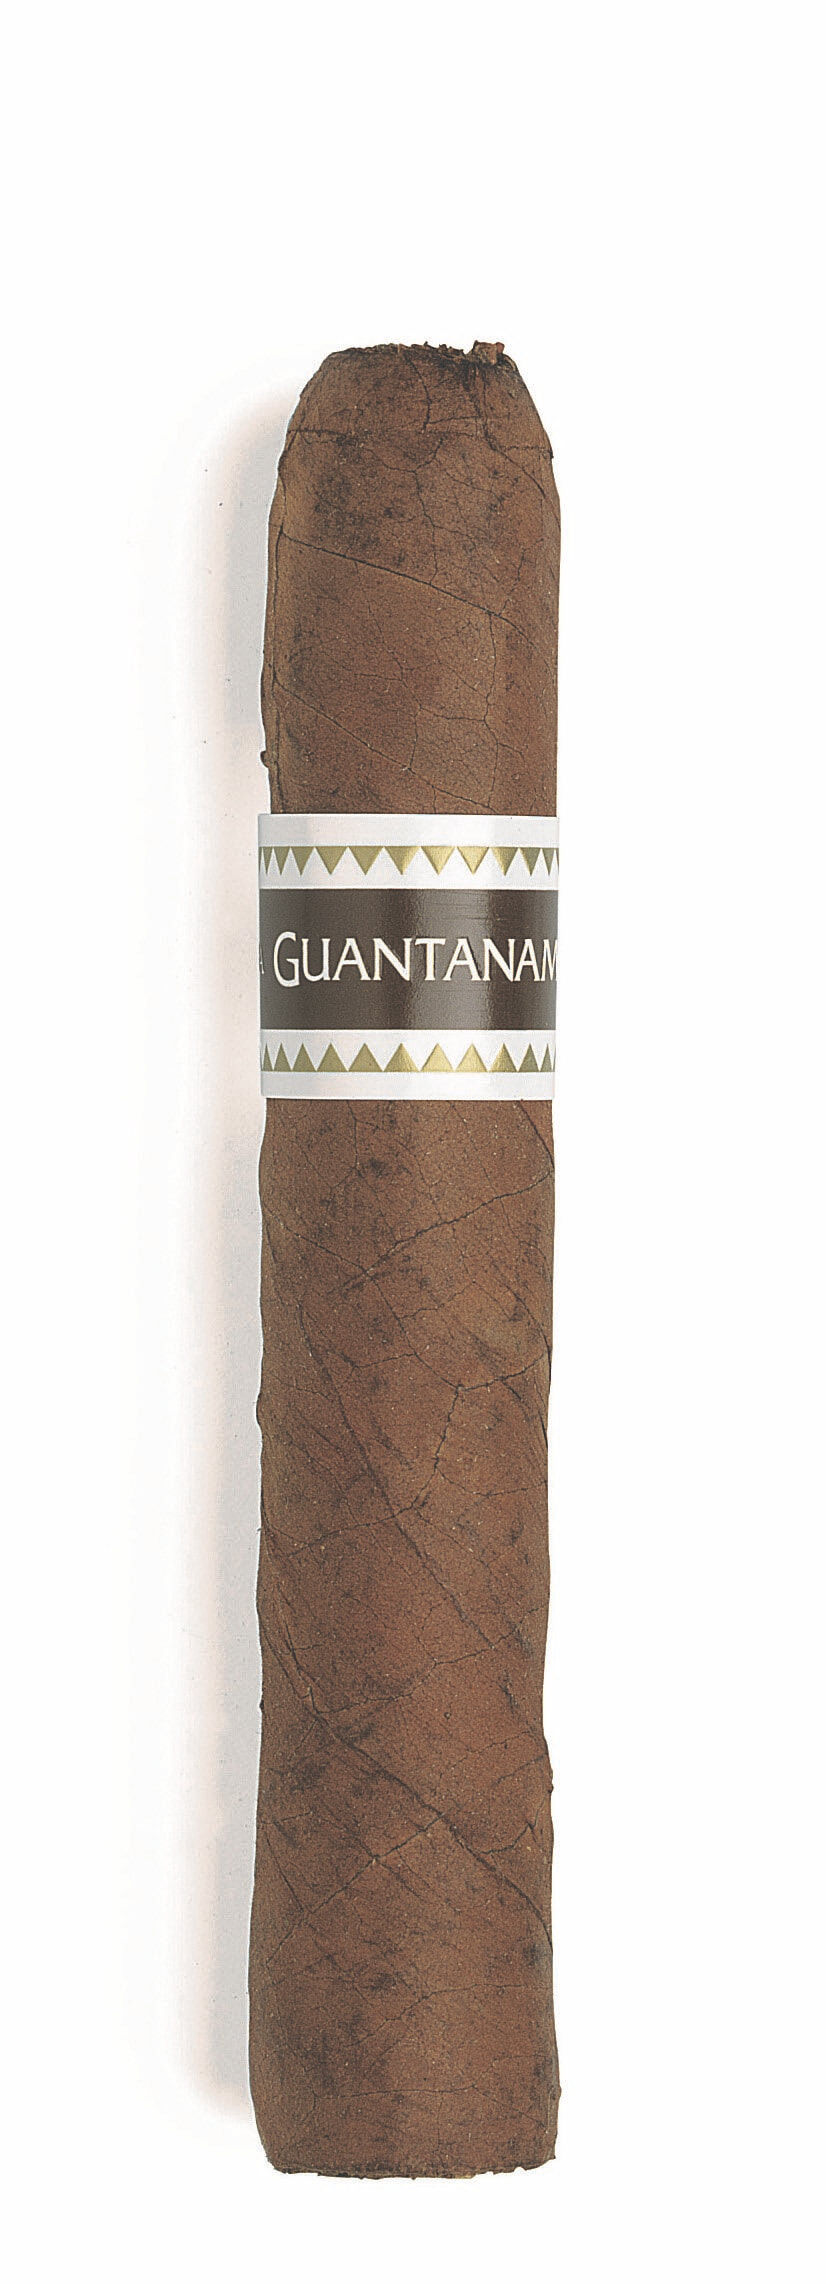 Guantanamera Minutos single cigar